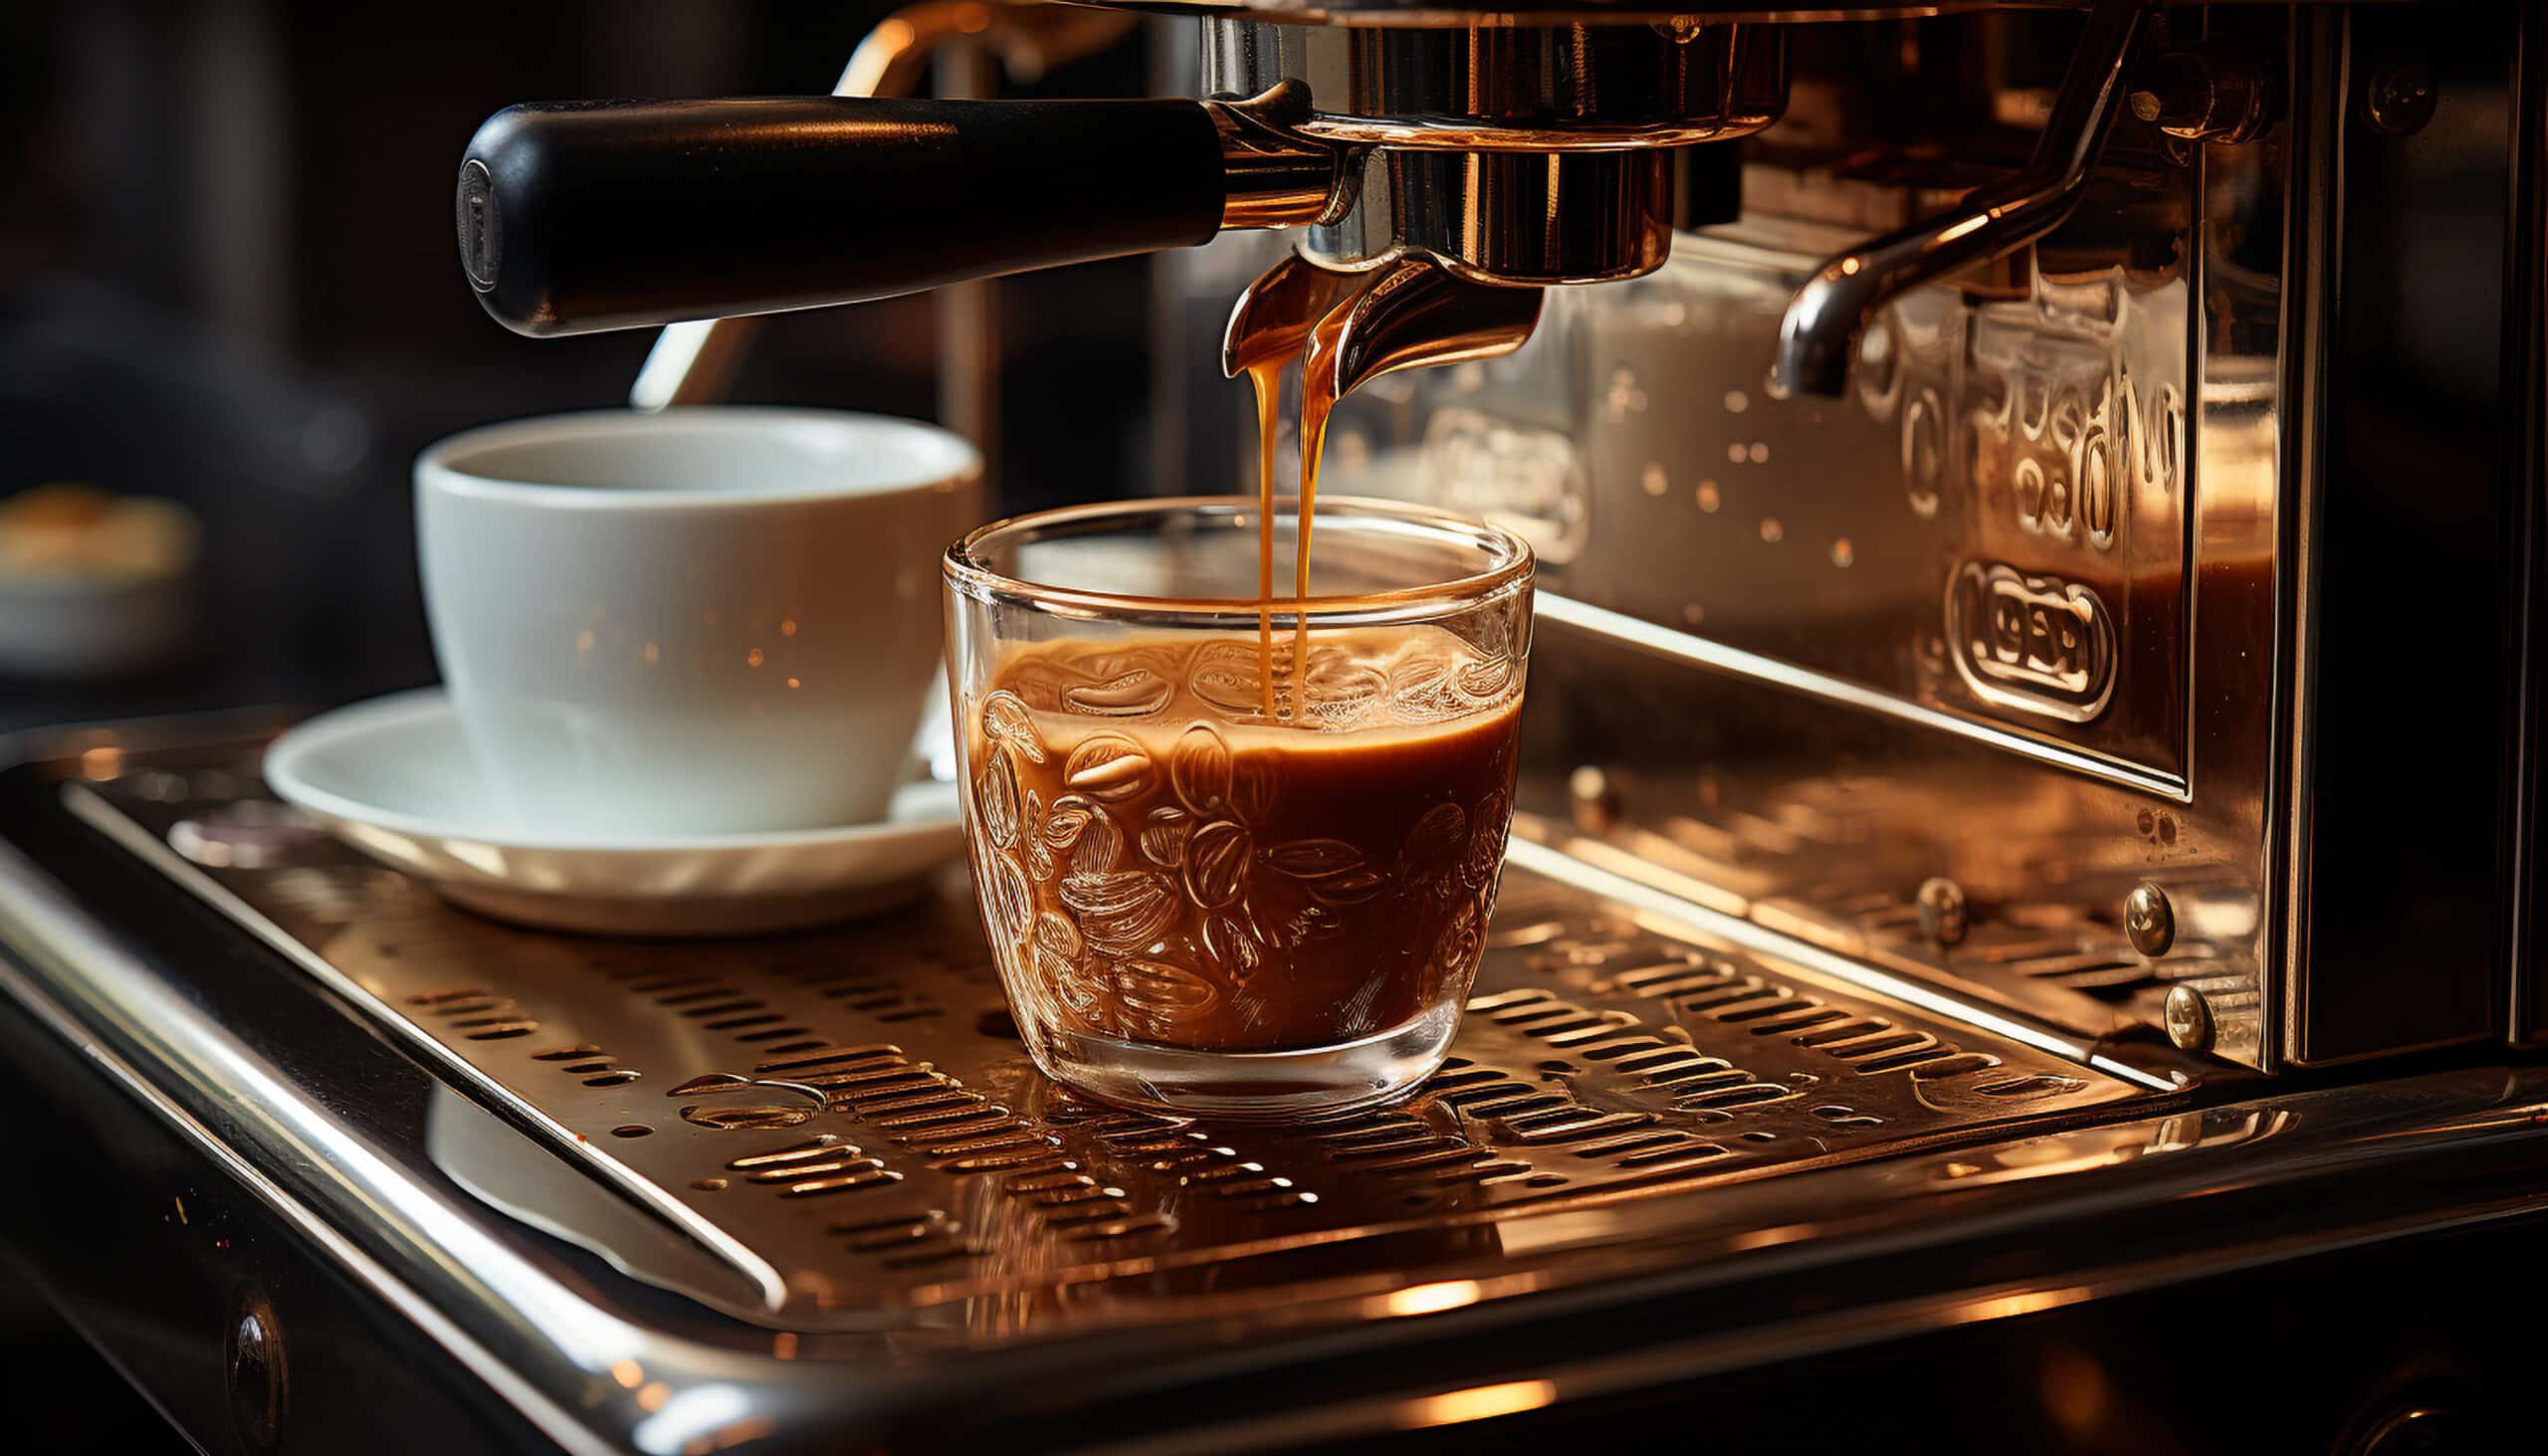 www.appr.com : How To Make Americano With Espresso Machine?